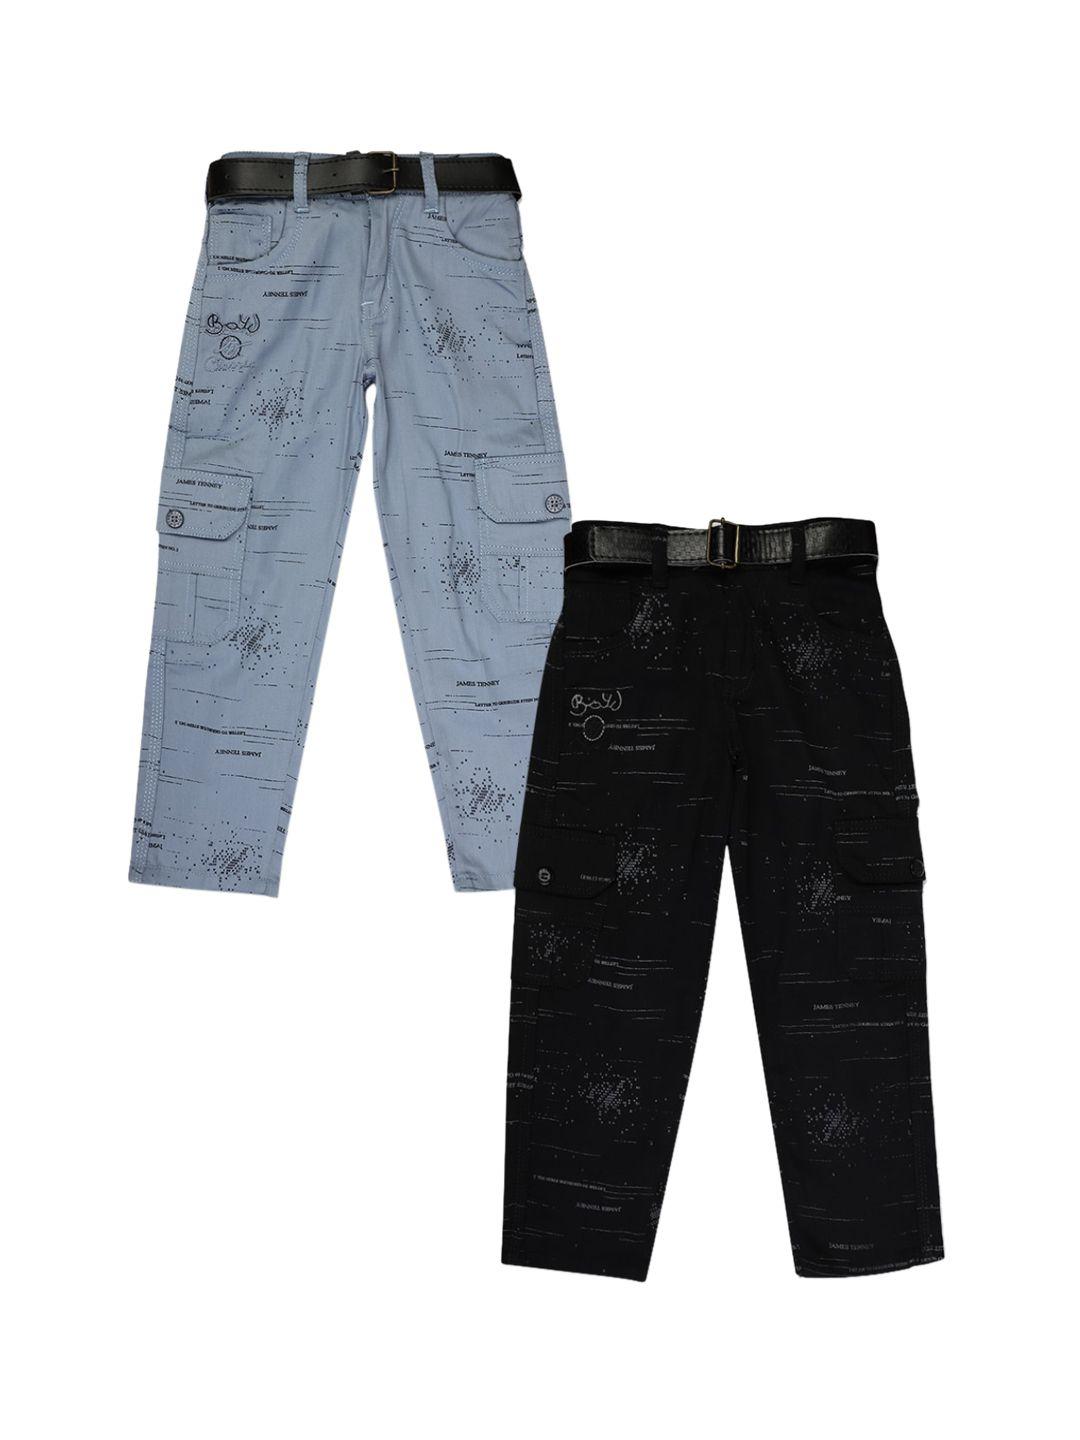 v-mart-boys-blue-printed-cargos-trousers